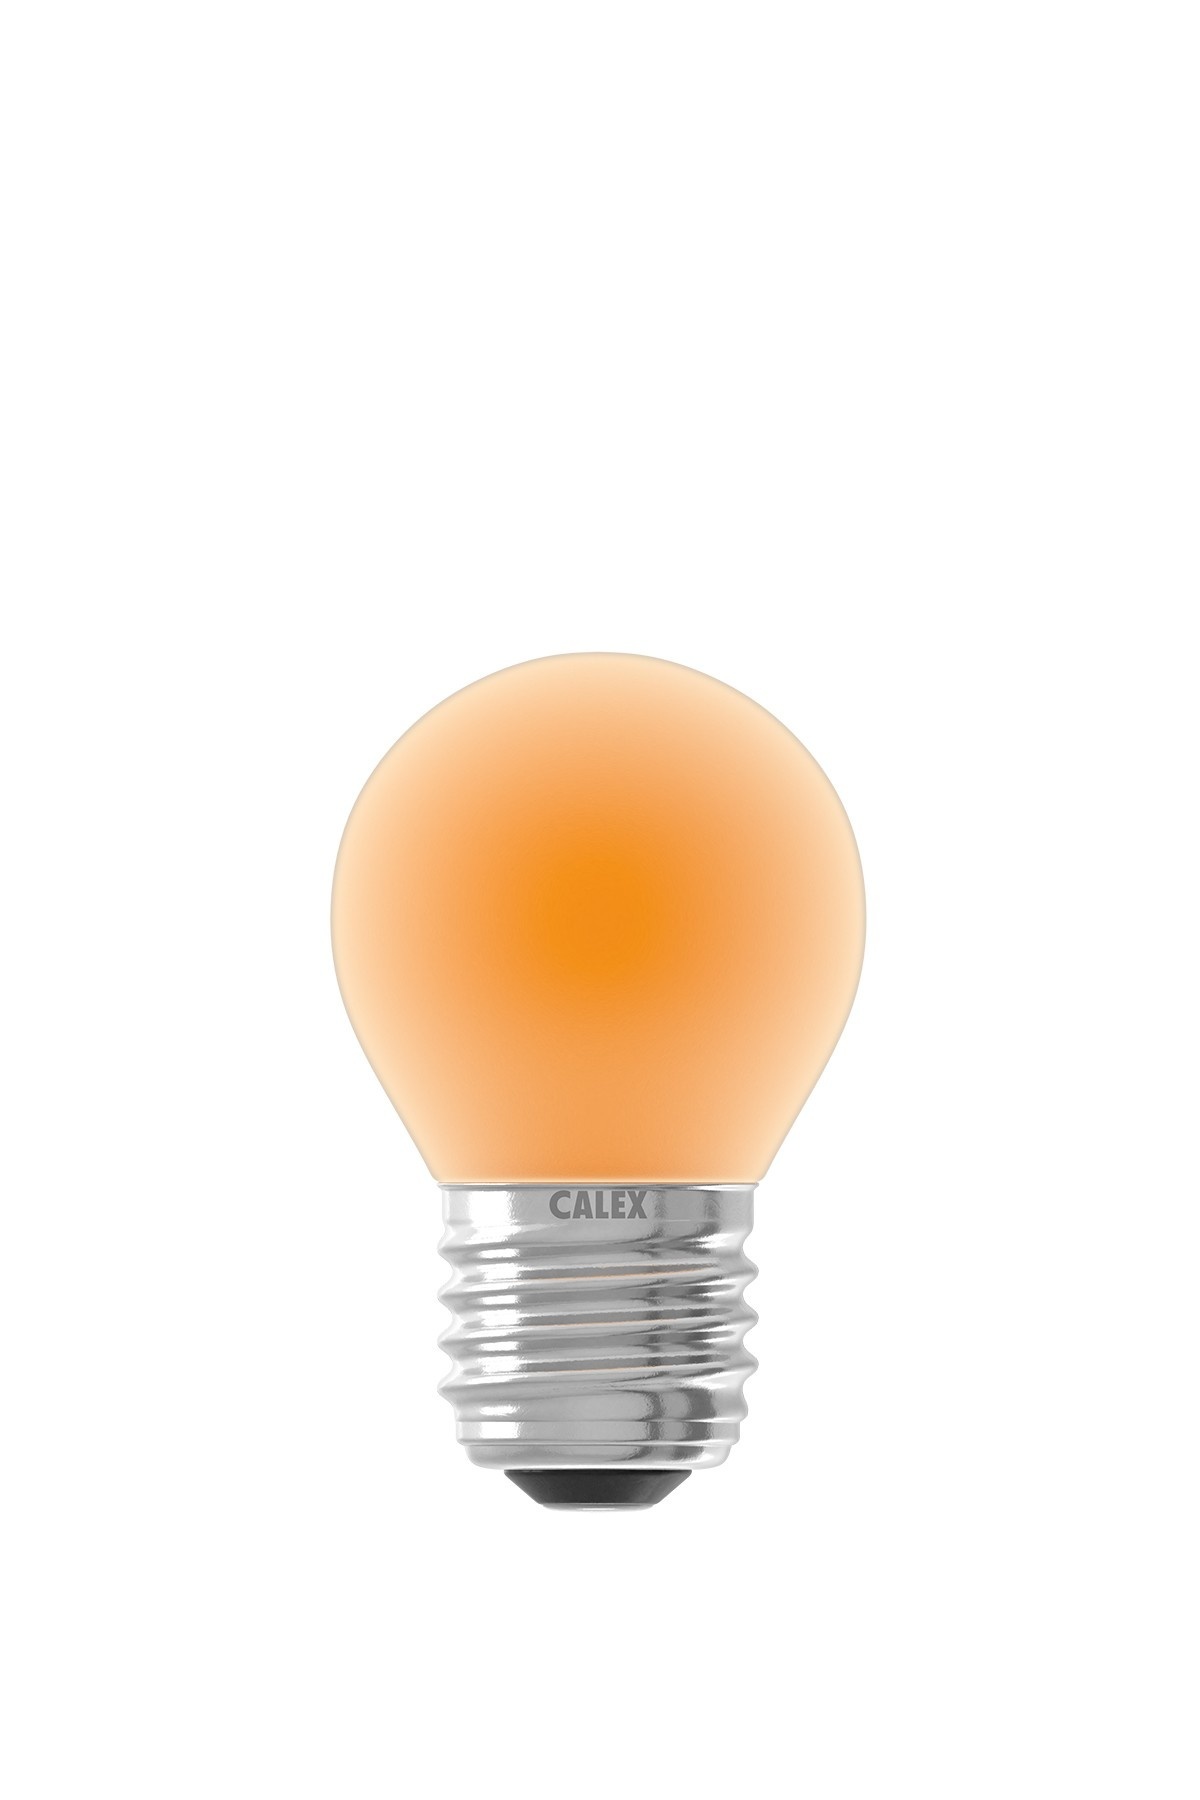 Farbige LED-Kugellampe - Orange - E27 - 1W - 240V 